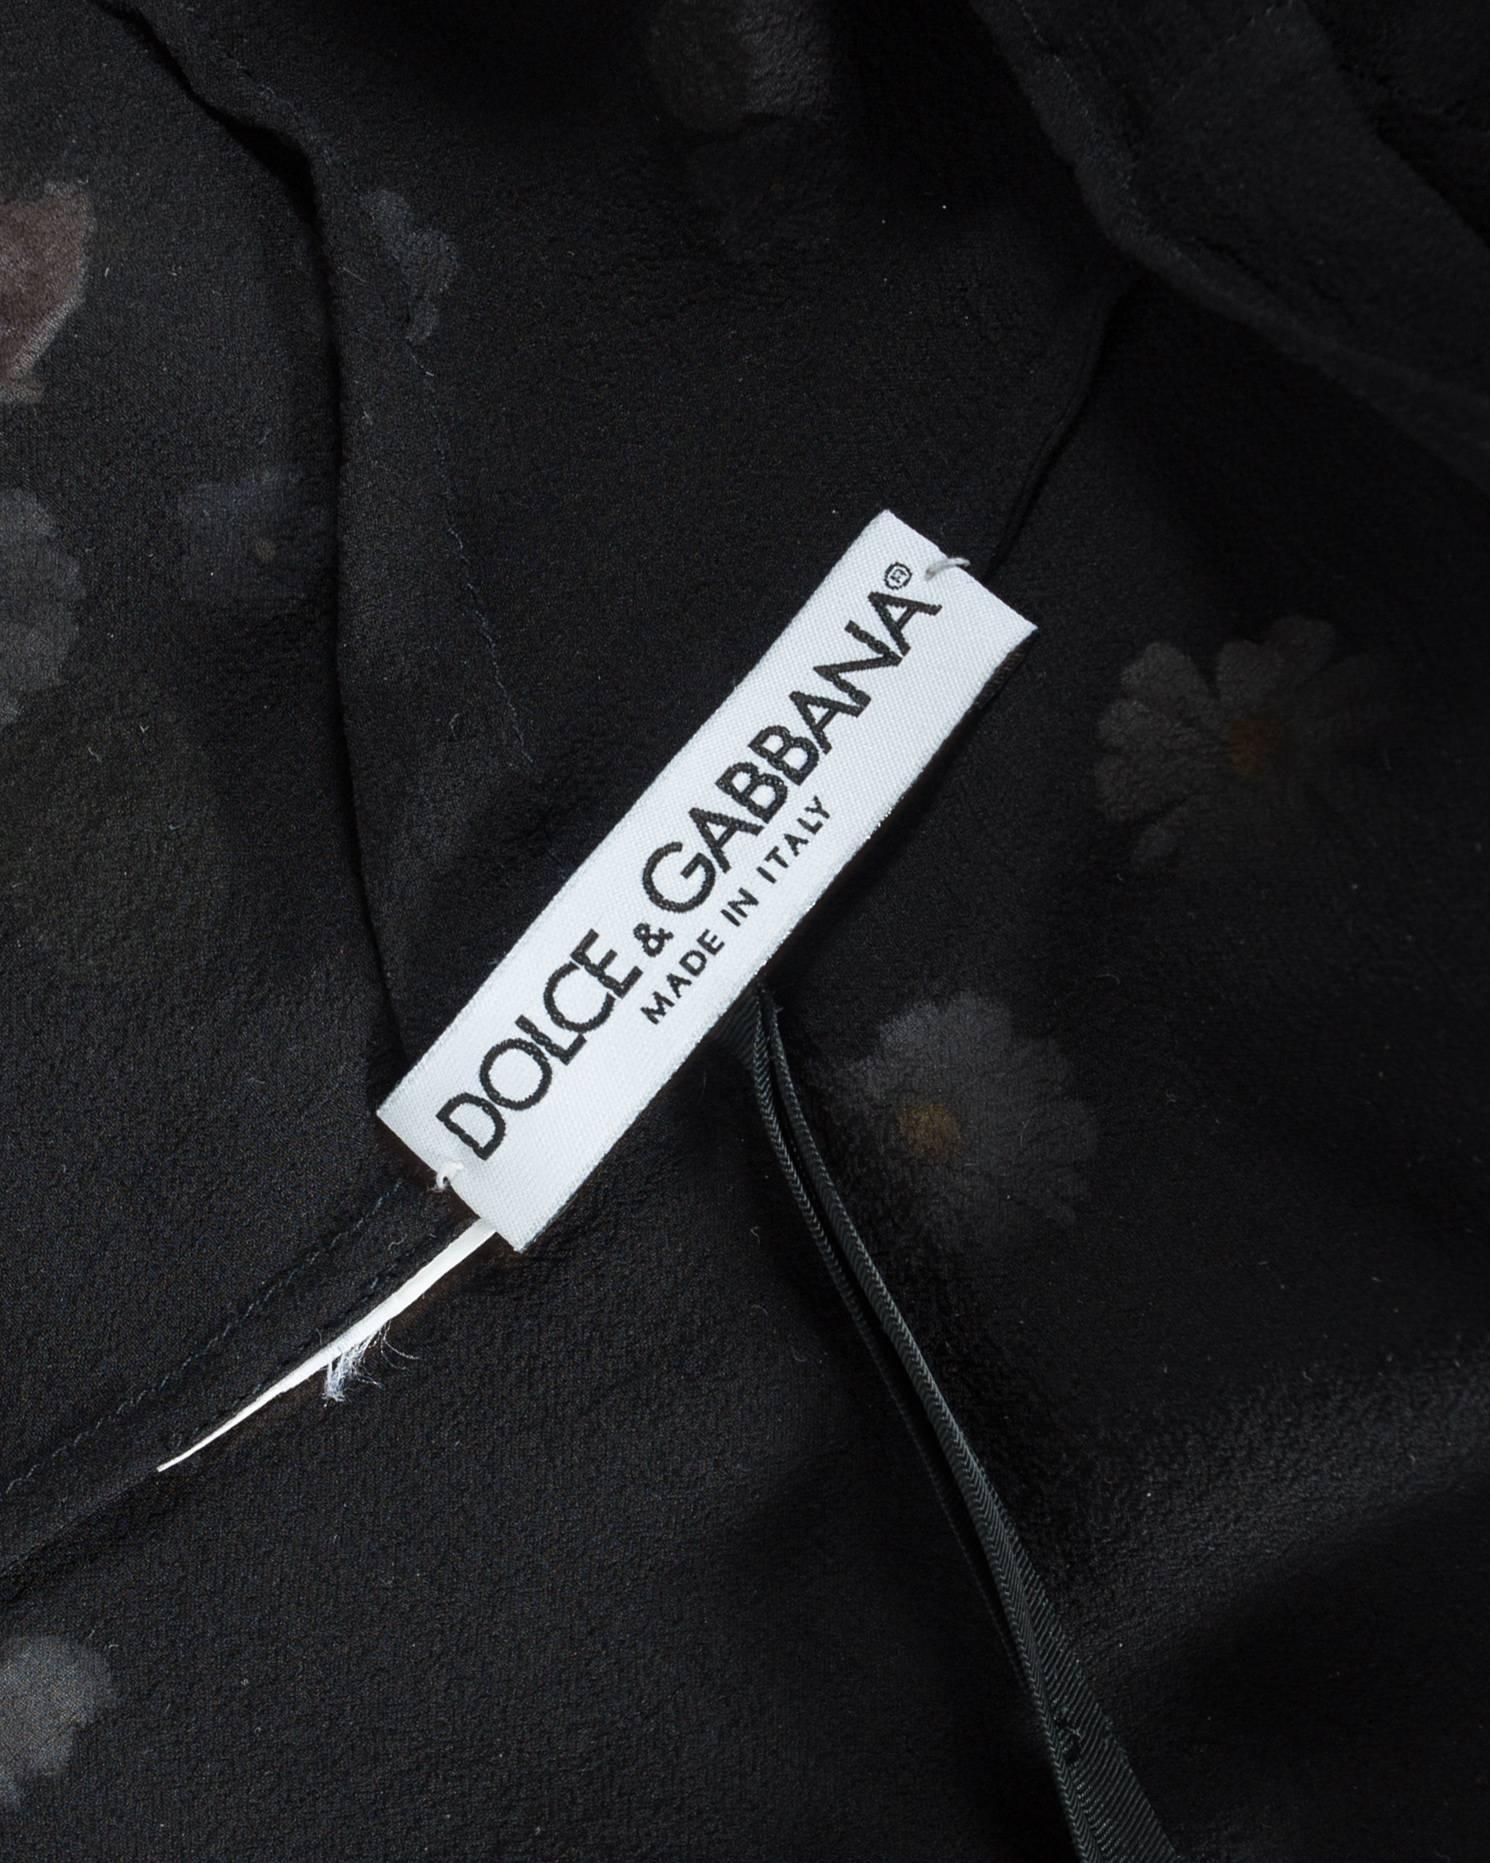 Dolce & Gabbana black chiffon camisole with built in bra, A/W 1999 2